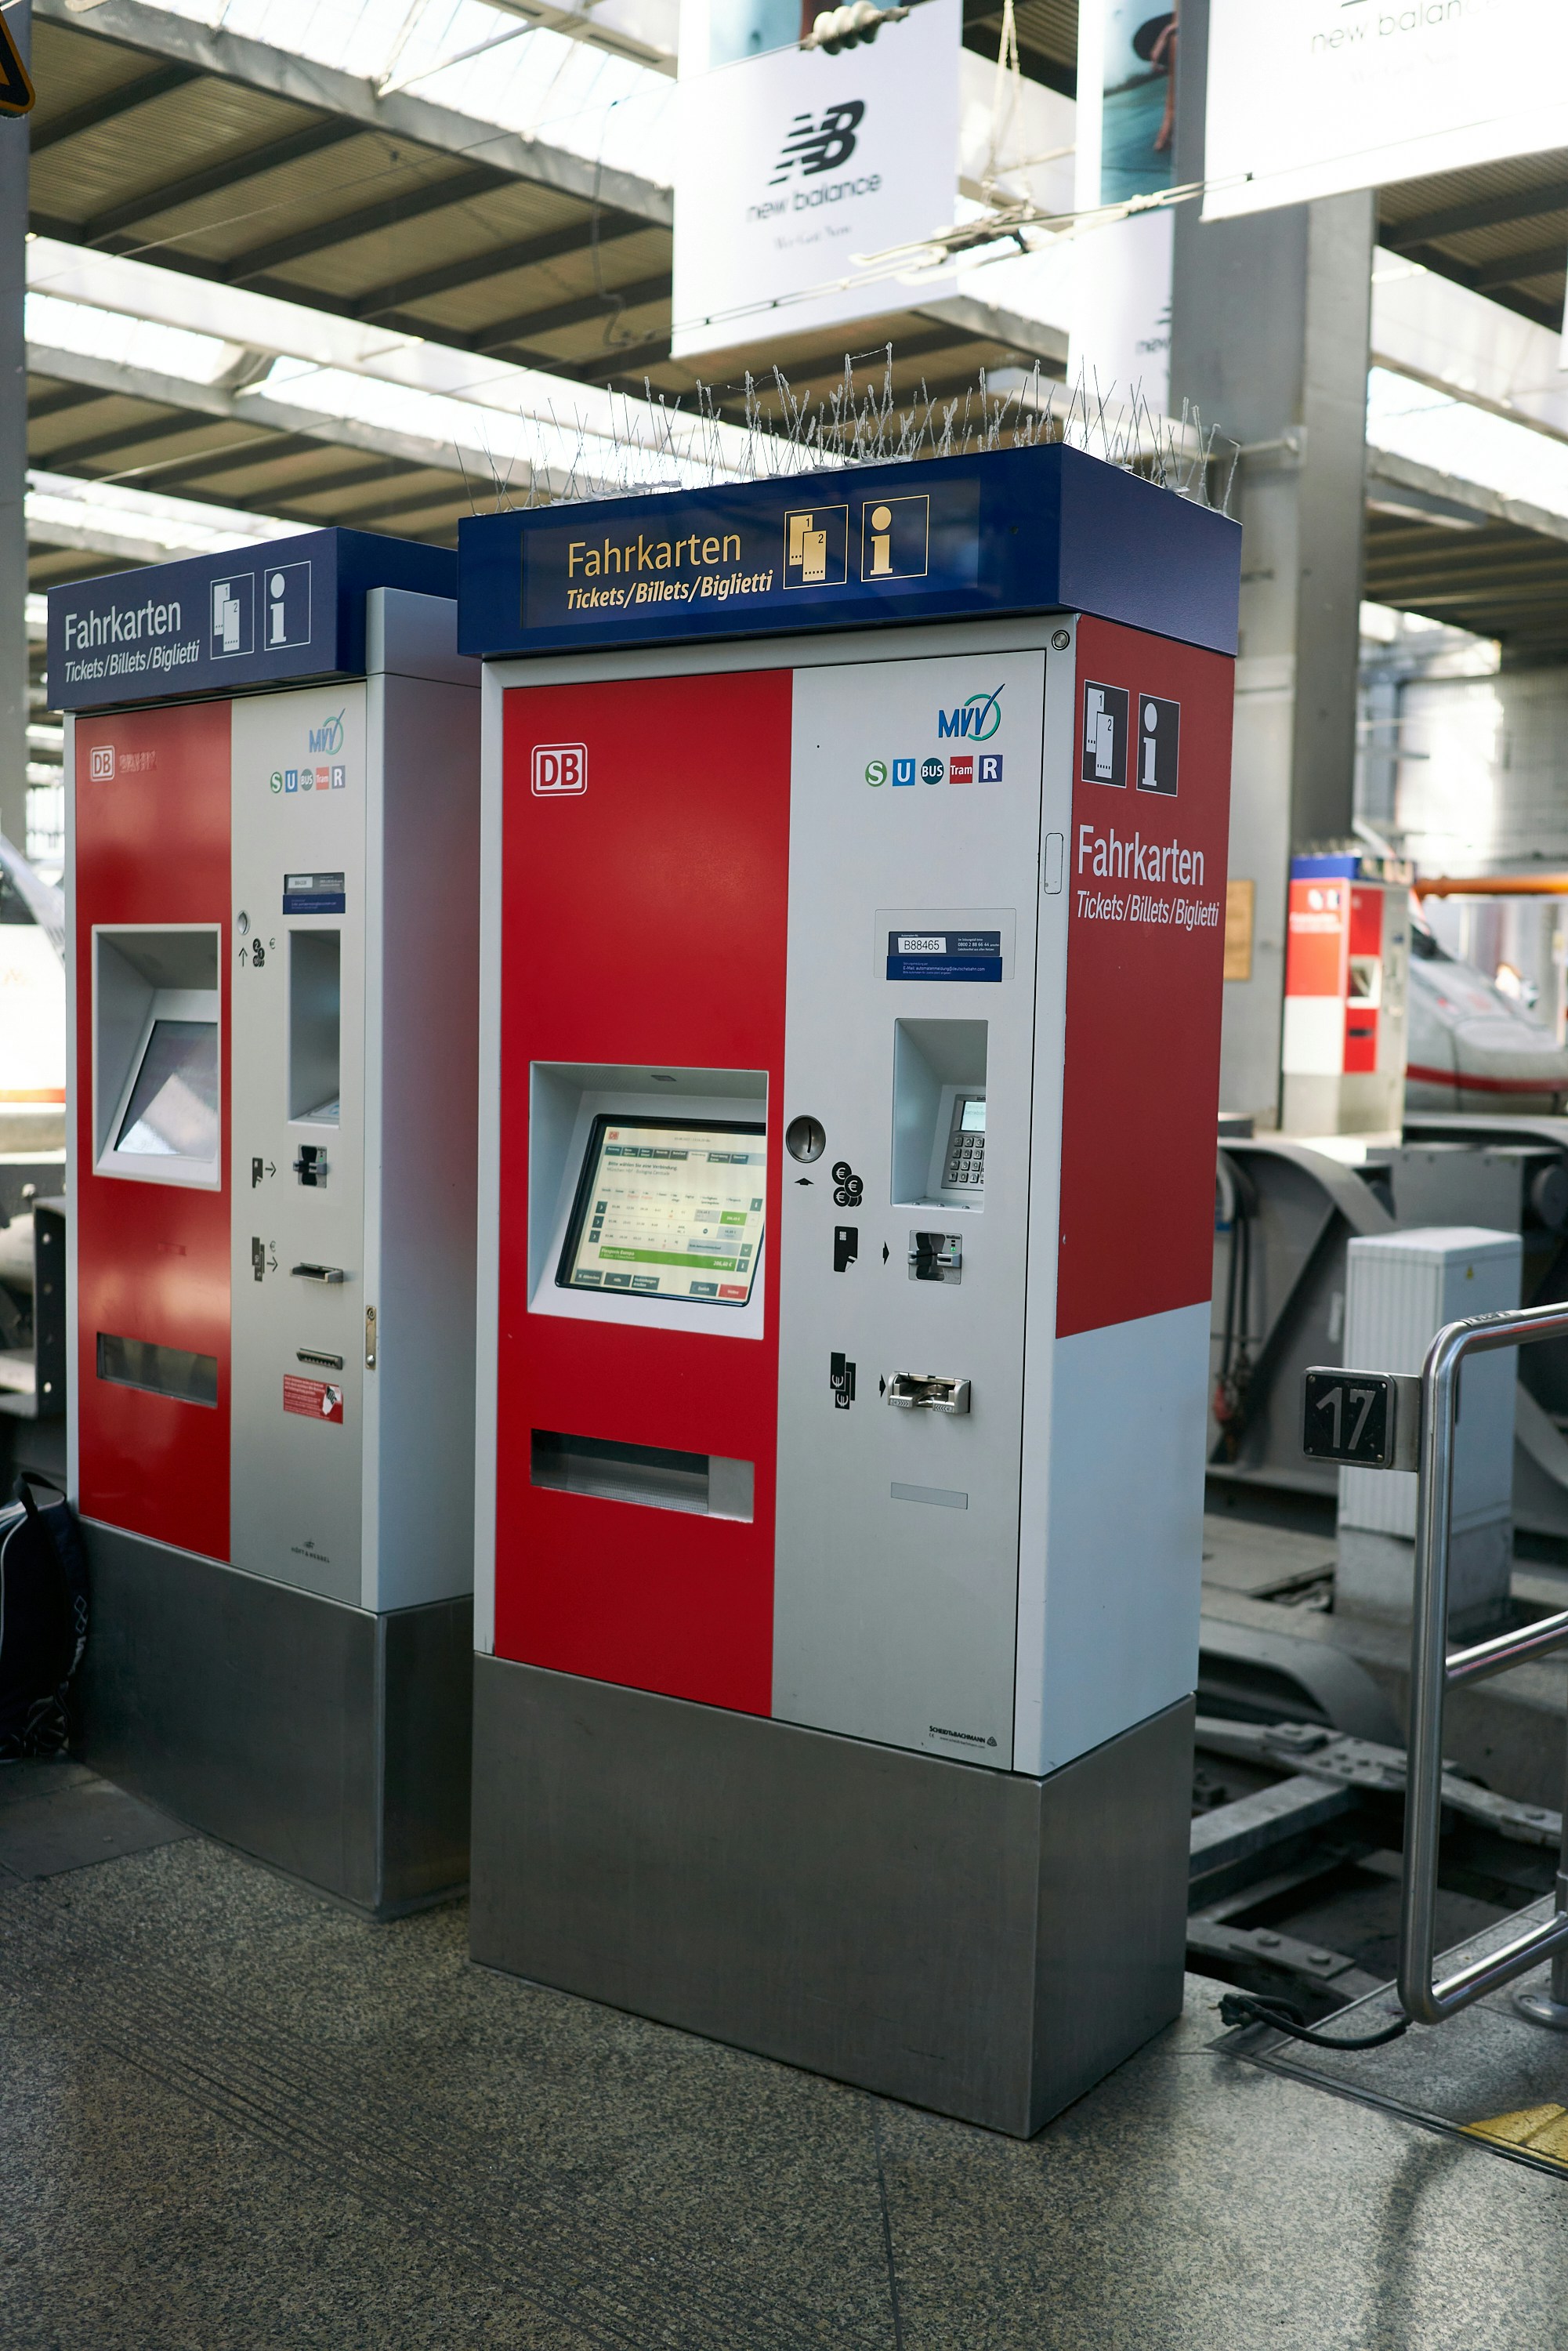 Ticket vending machines at the railway station Hauptbahnhof. Fahrkarten